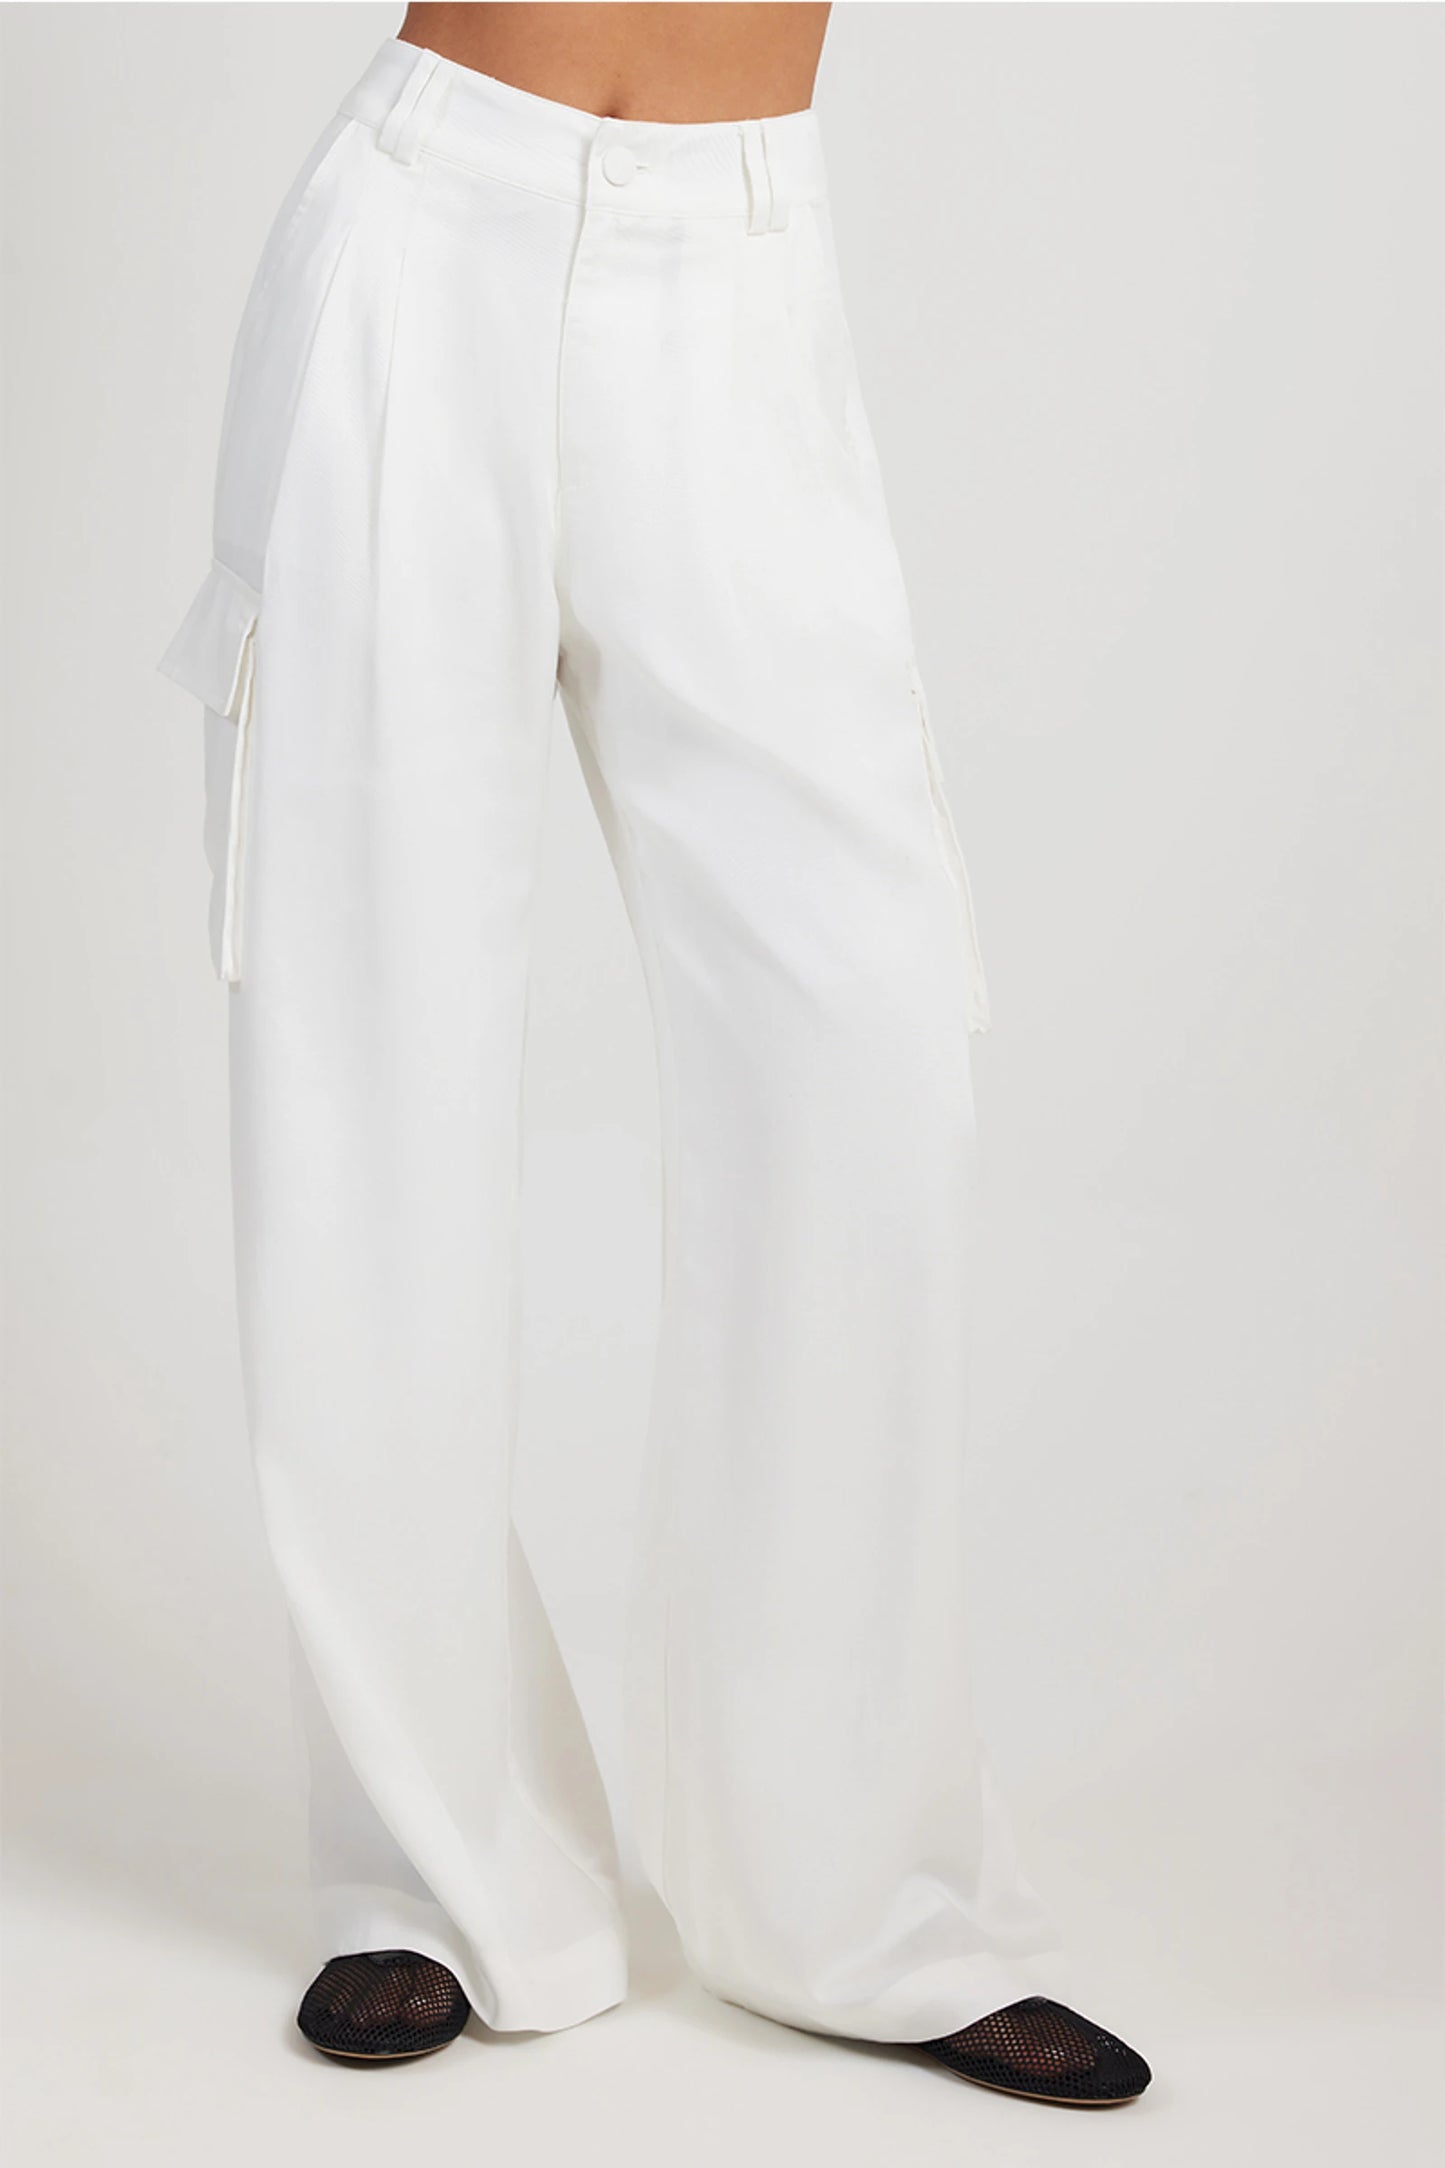 Ena Pelly Hayley Cargo Pant - Vintage White